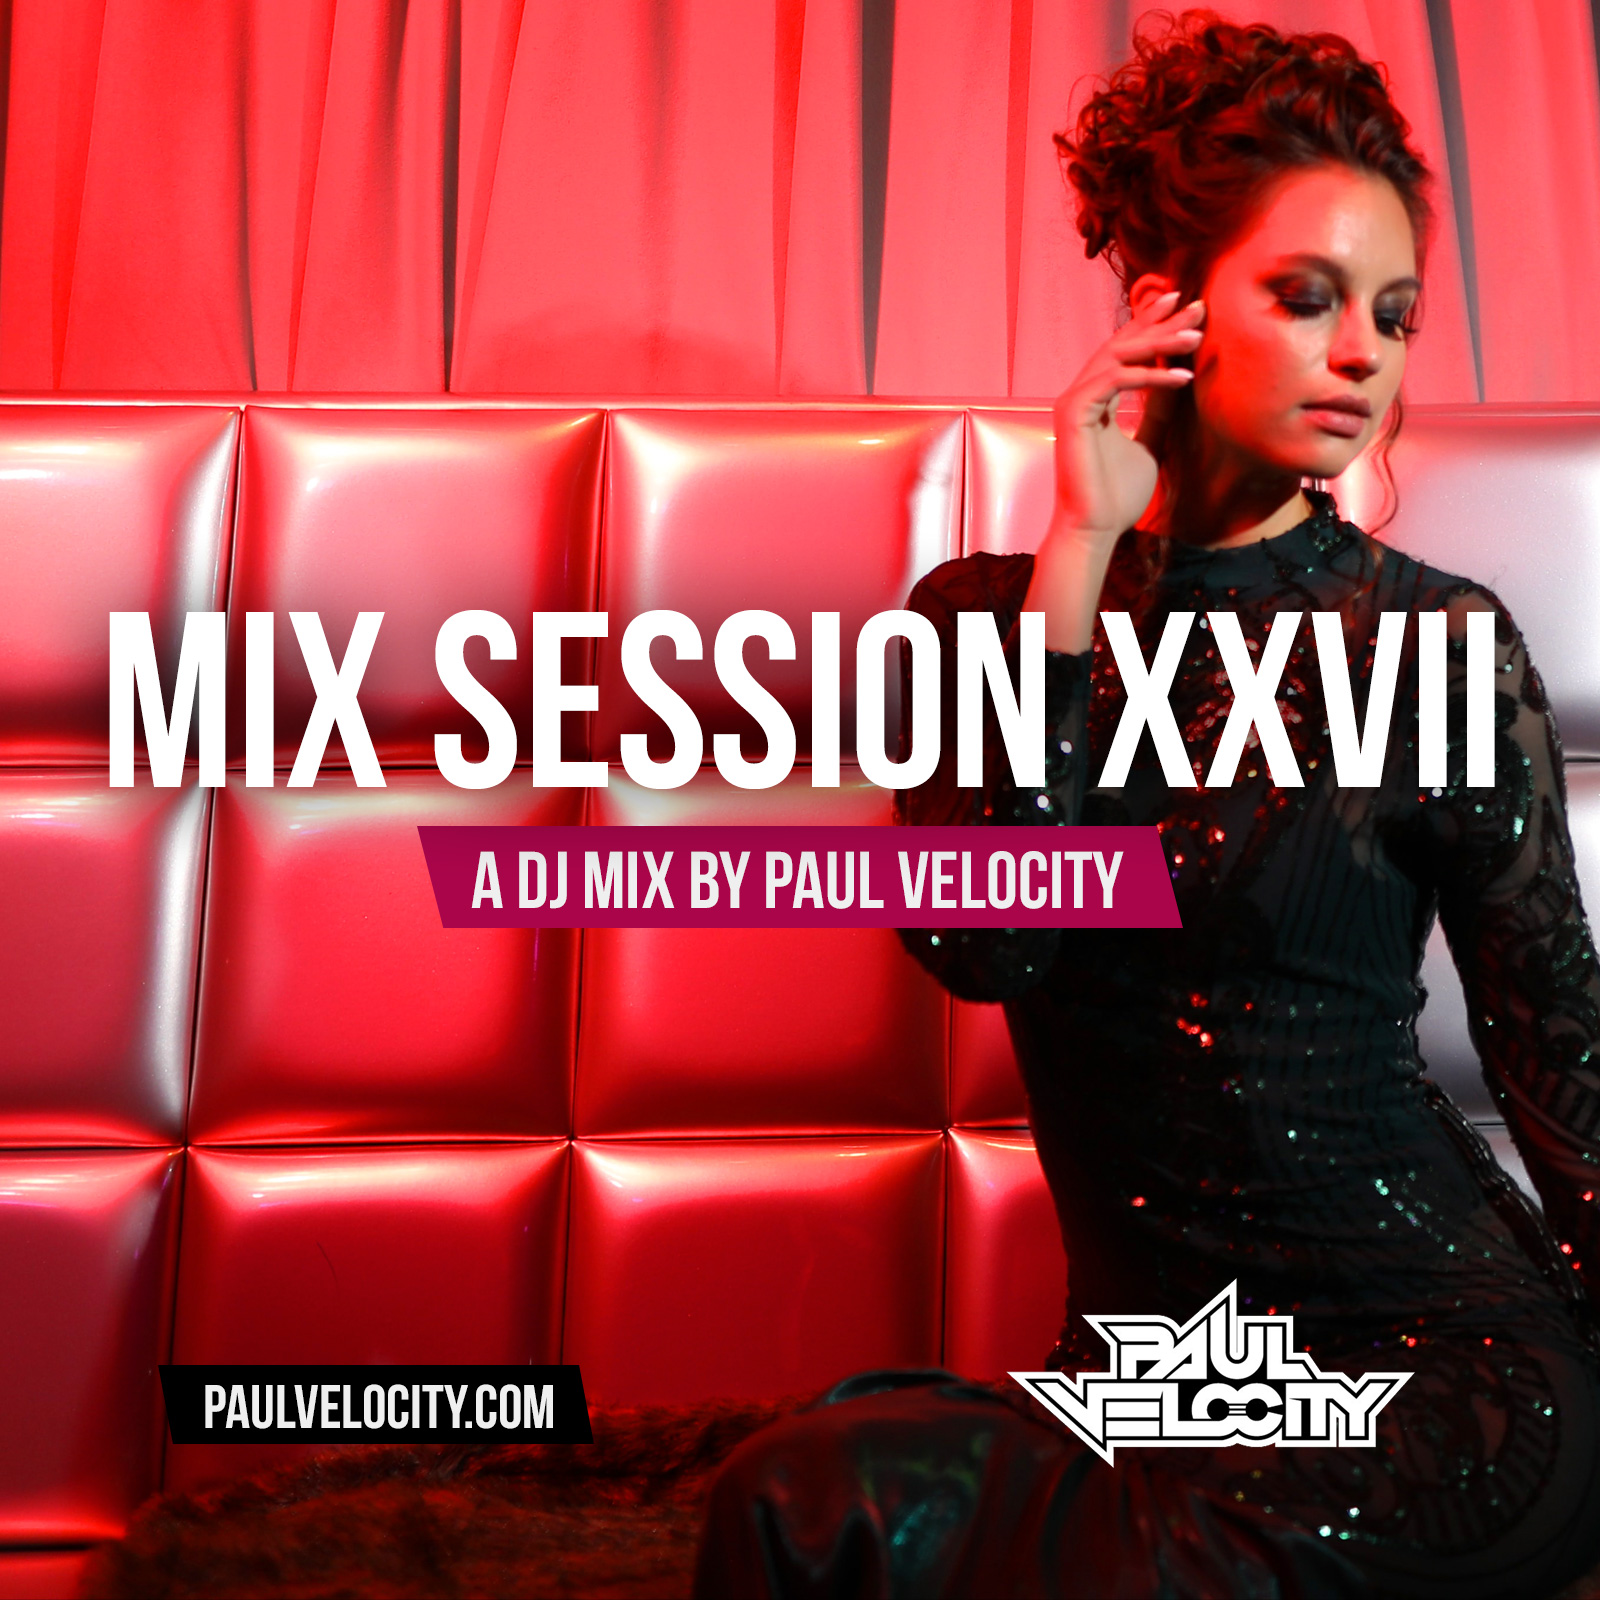 Mix Session XXVII